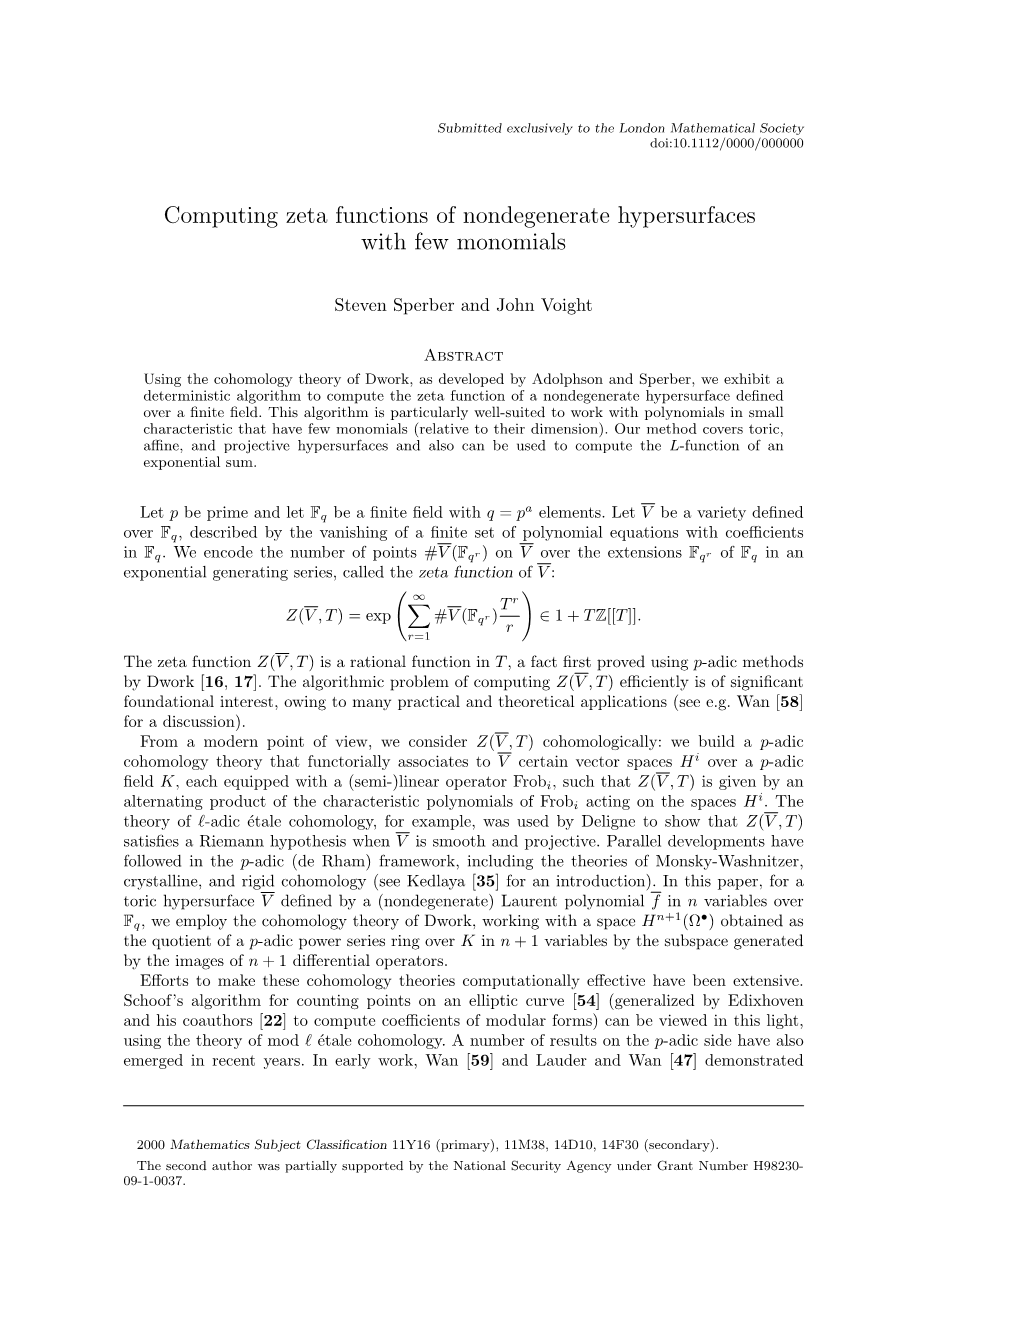 Computing Zeta Functions of Nondegenerate Hypersurfaces with Few Monomials